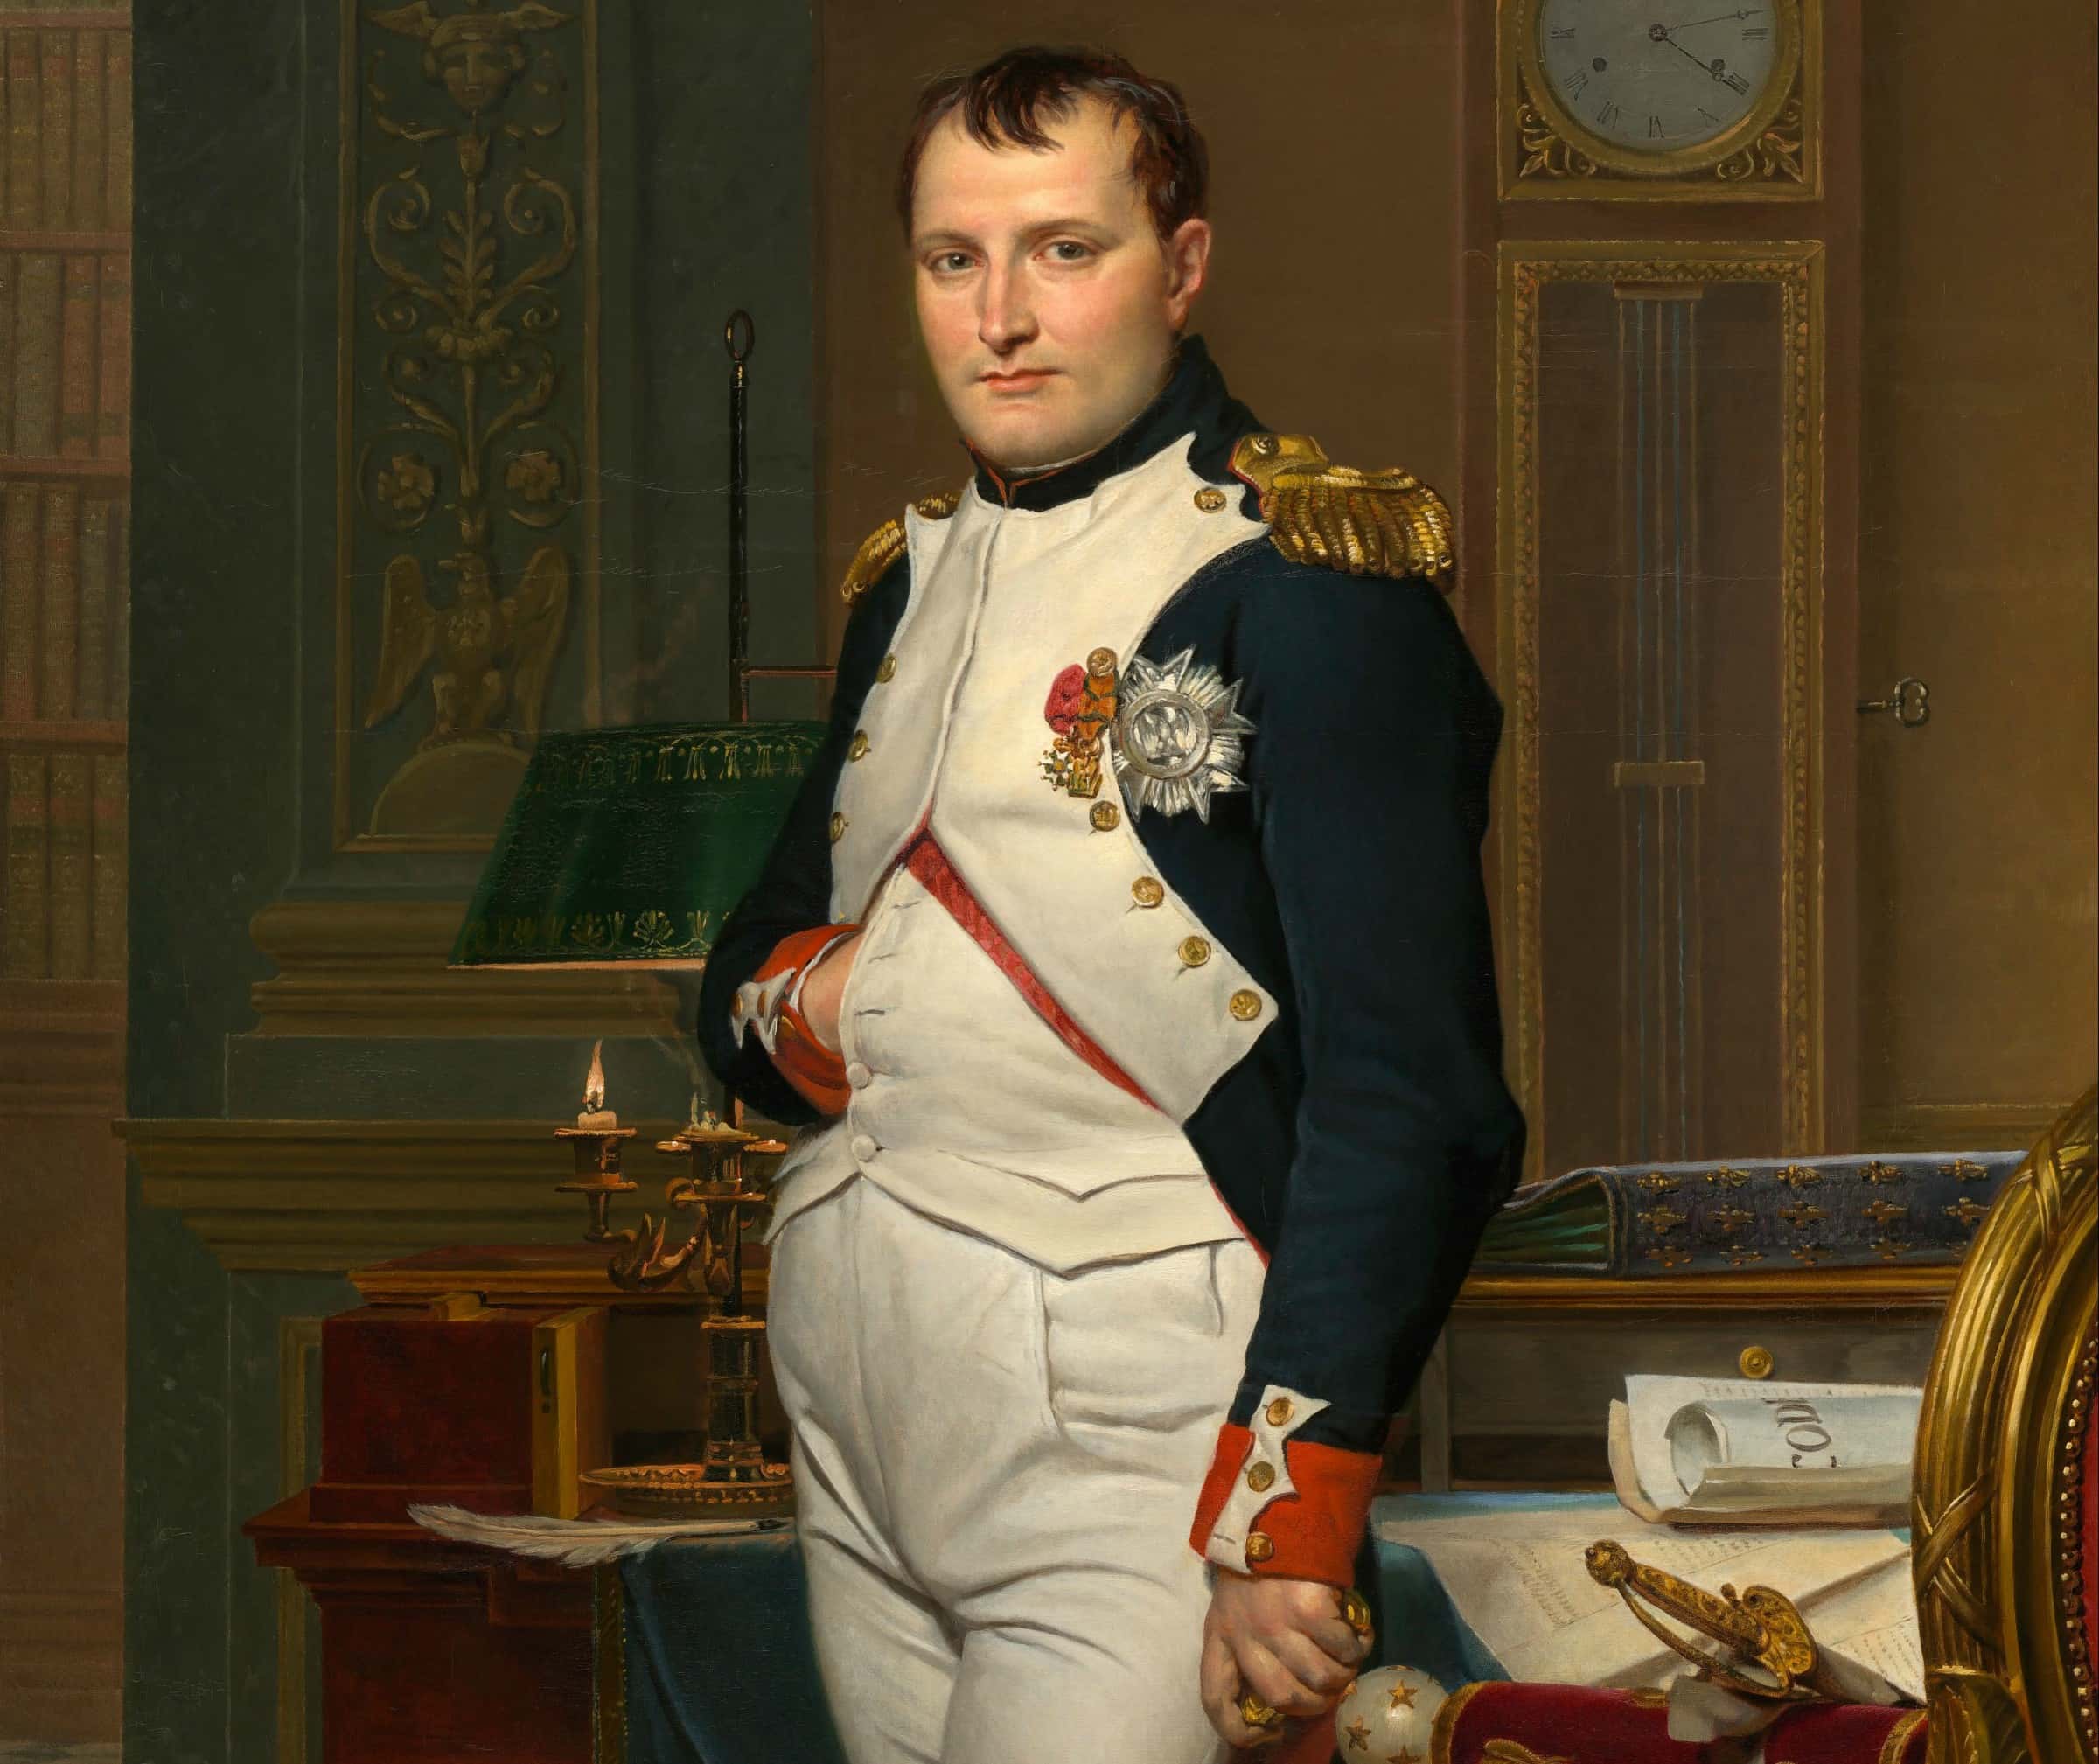 Napoleon Bonaparte Facts